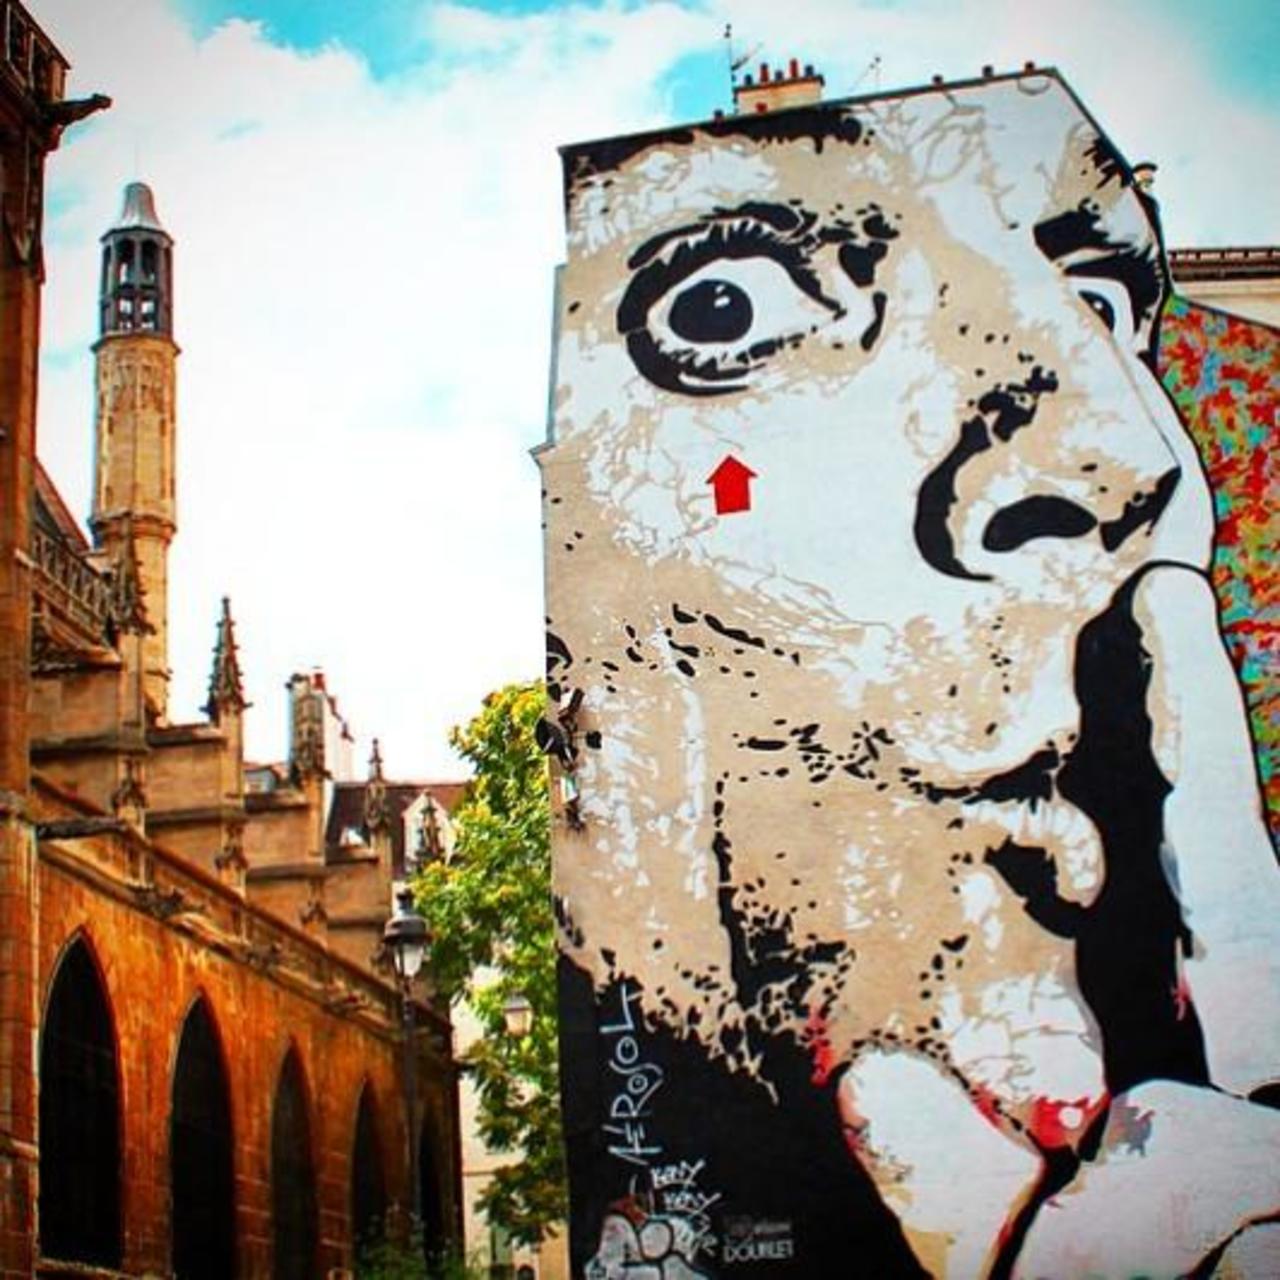 Shhhh.. Art in the making☝️
#instaparis #paris #streetartparis #streetart #graffiti #stencil #art #dali #salvadorda… http://t.co/Bw8MTOODvT